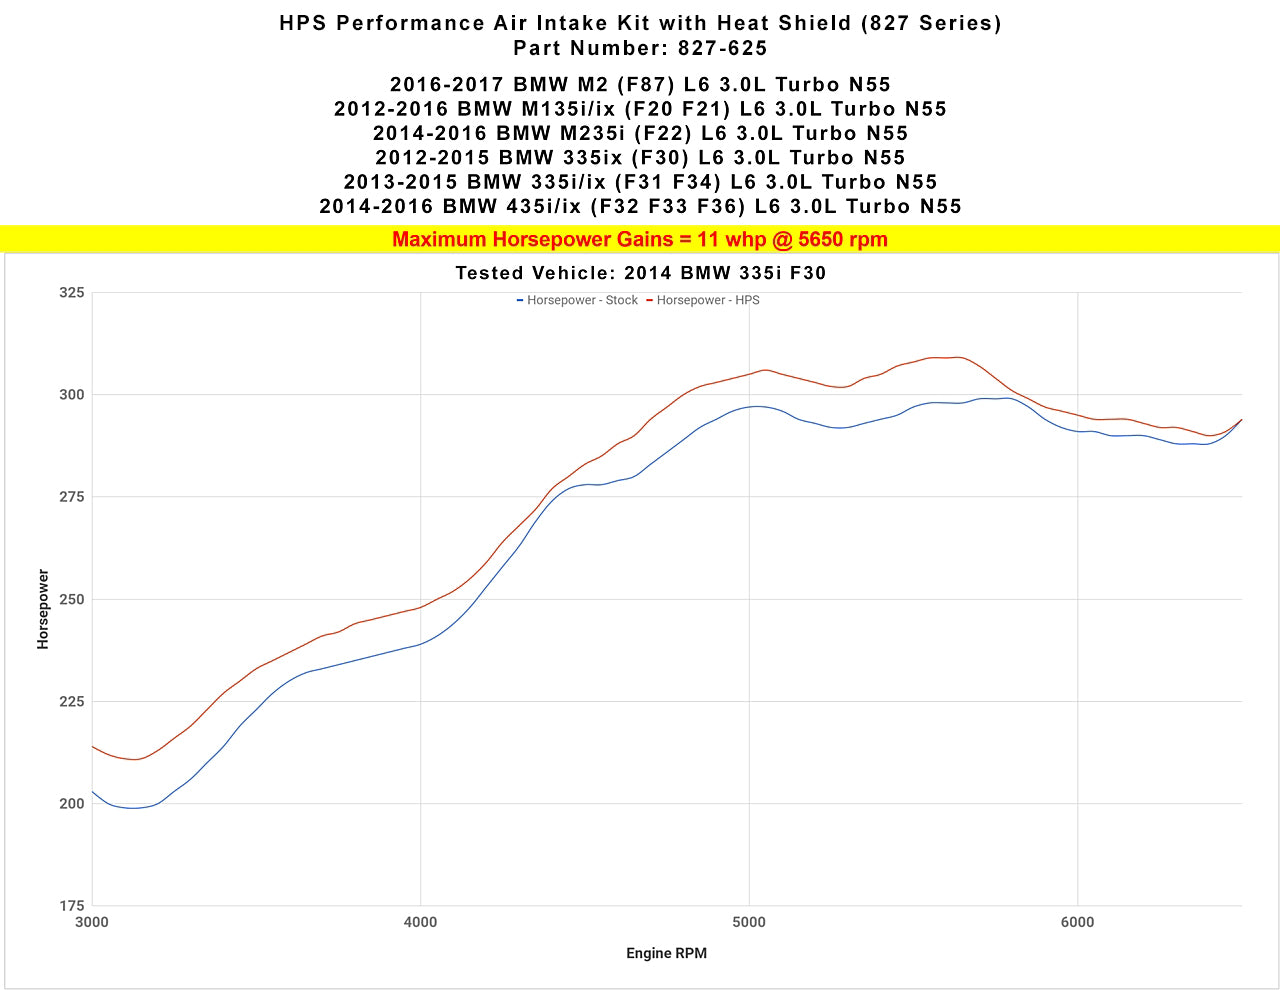 Dyno proven gains 11 whp HPS Performance Shortram Air Intake Kit 2012-2015 BMW 335ix F30 3.0L Turbo N55 827-625P